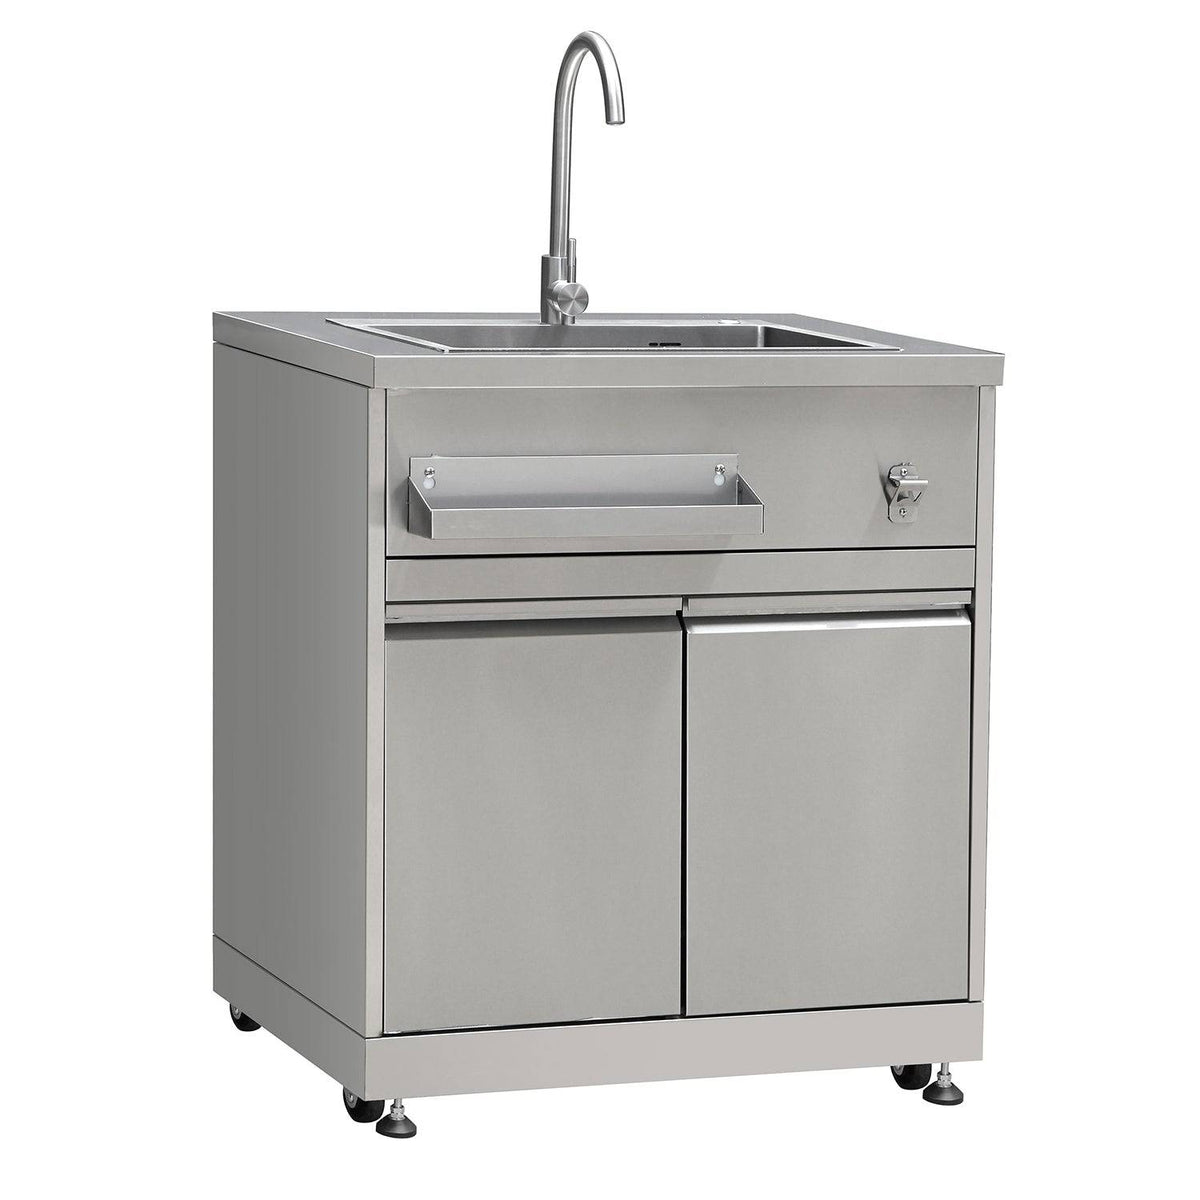 Fobest Stainless Steel Outdoor Kitchen Sink Cabinet with Storage Tray - Sink Cabinet-Fobest Appliance